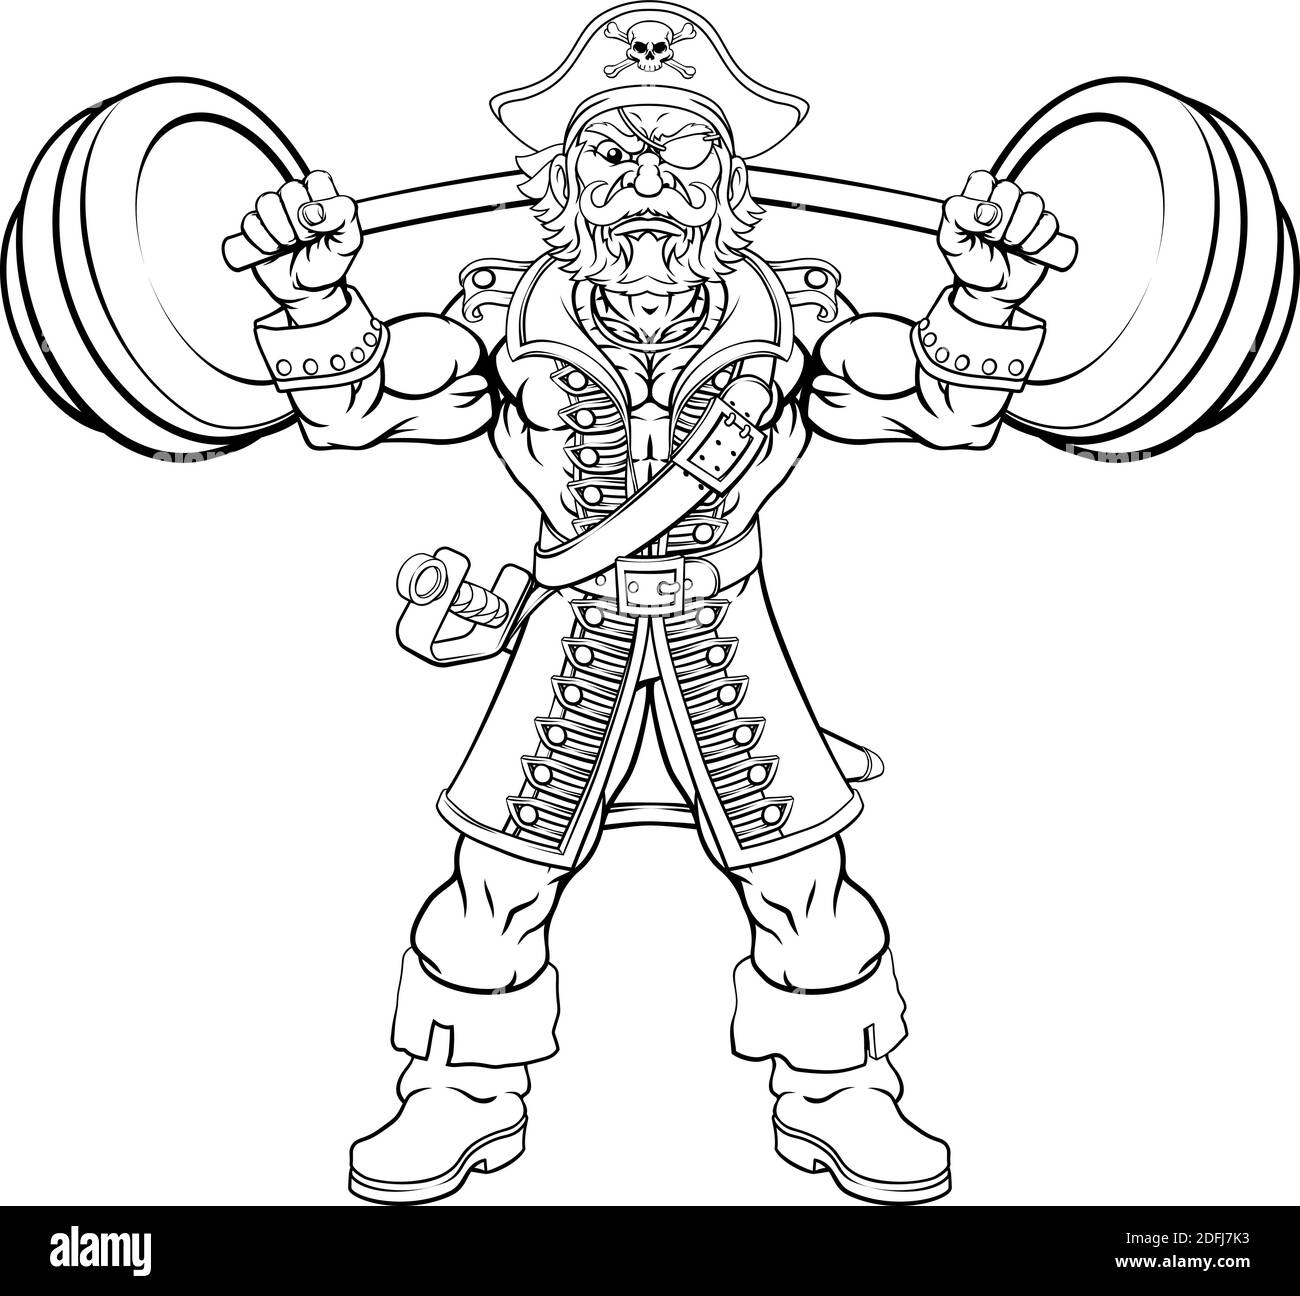 Pirate levée de poids Barbell Cartoon Mascot Illustration de Vecteur